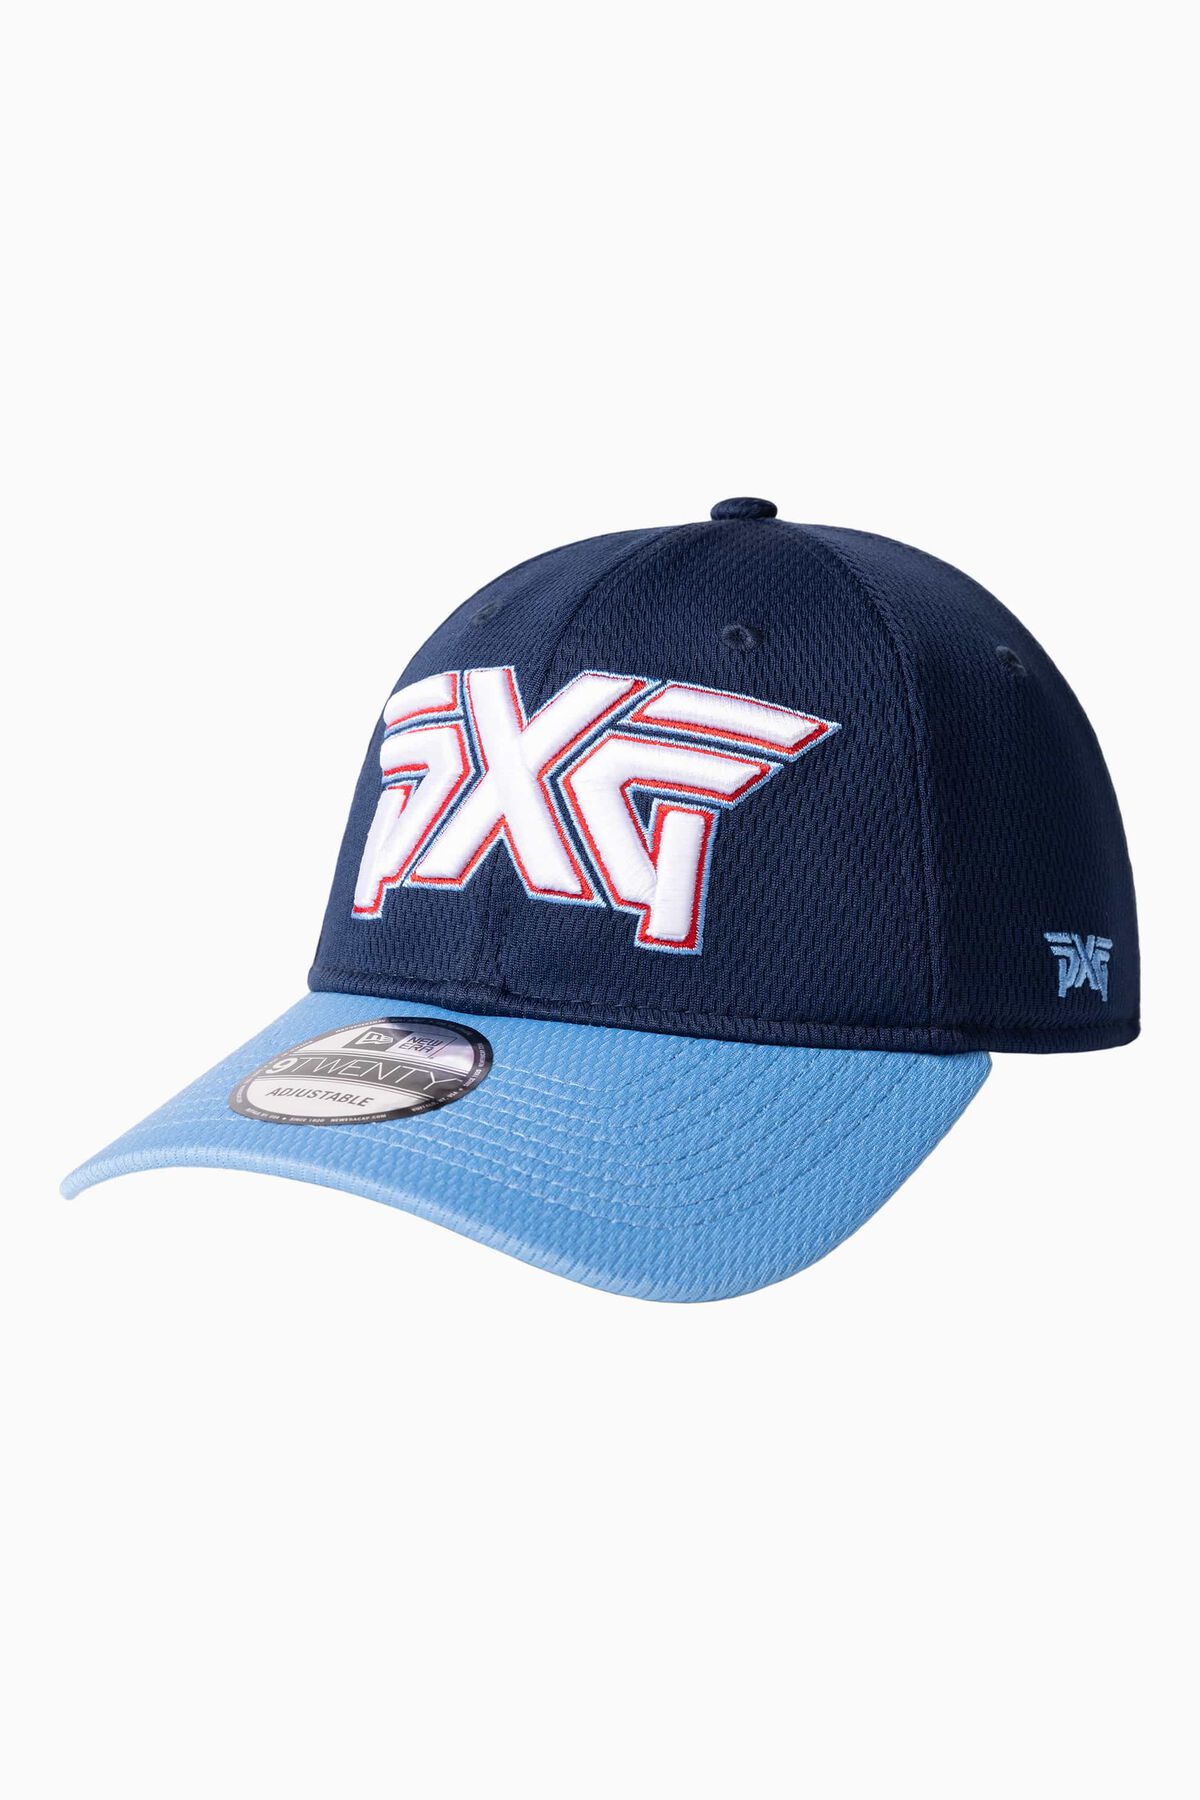 PXG Nashville Navy/Blue 9TWENTY Adjustable Cap 